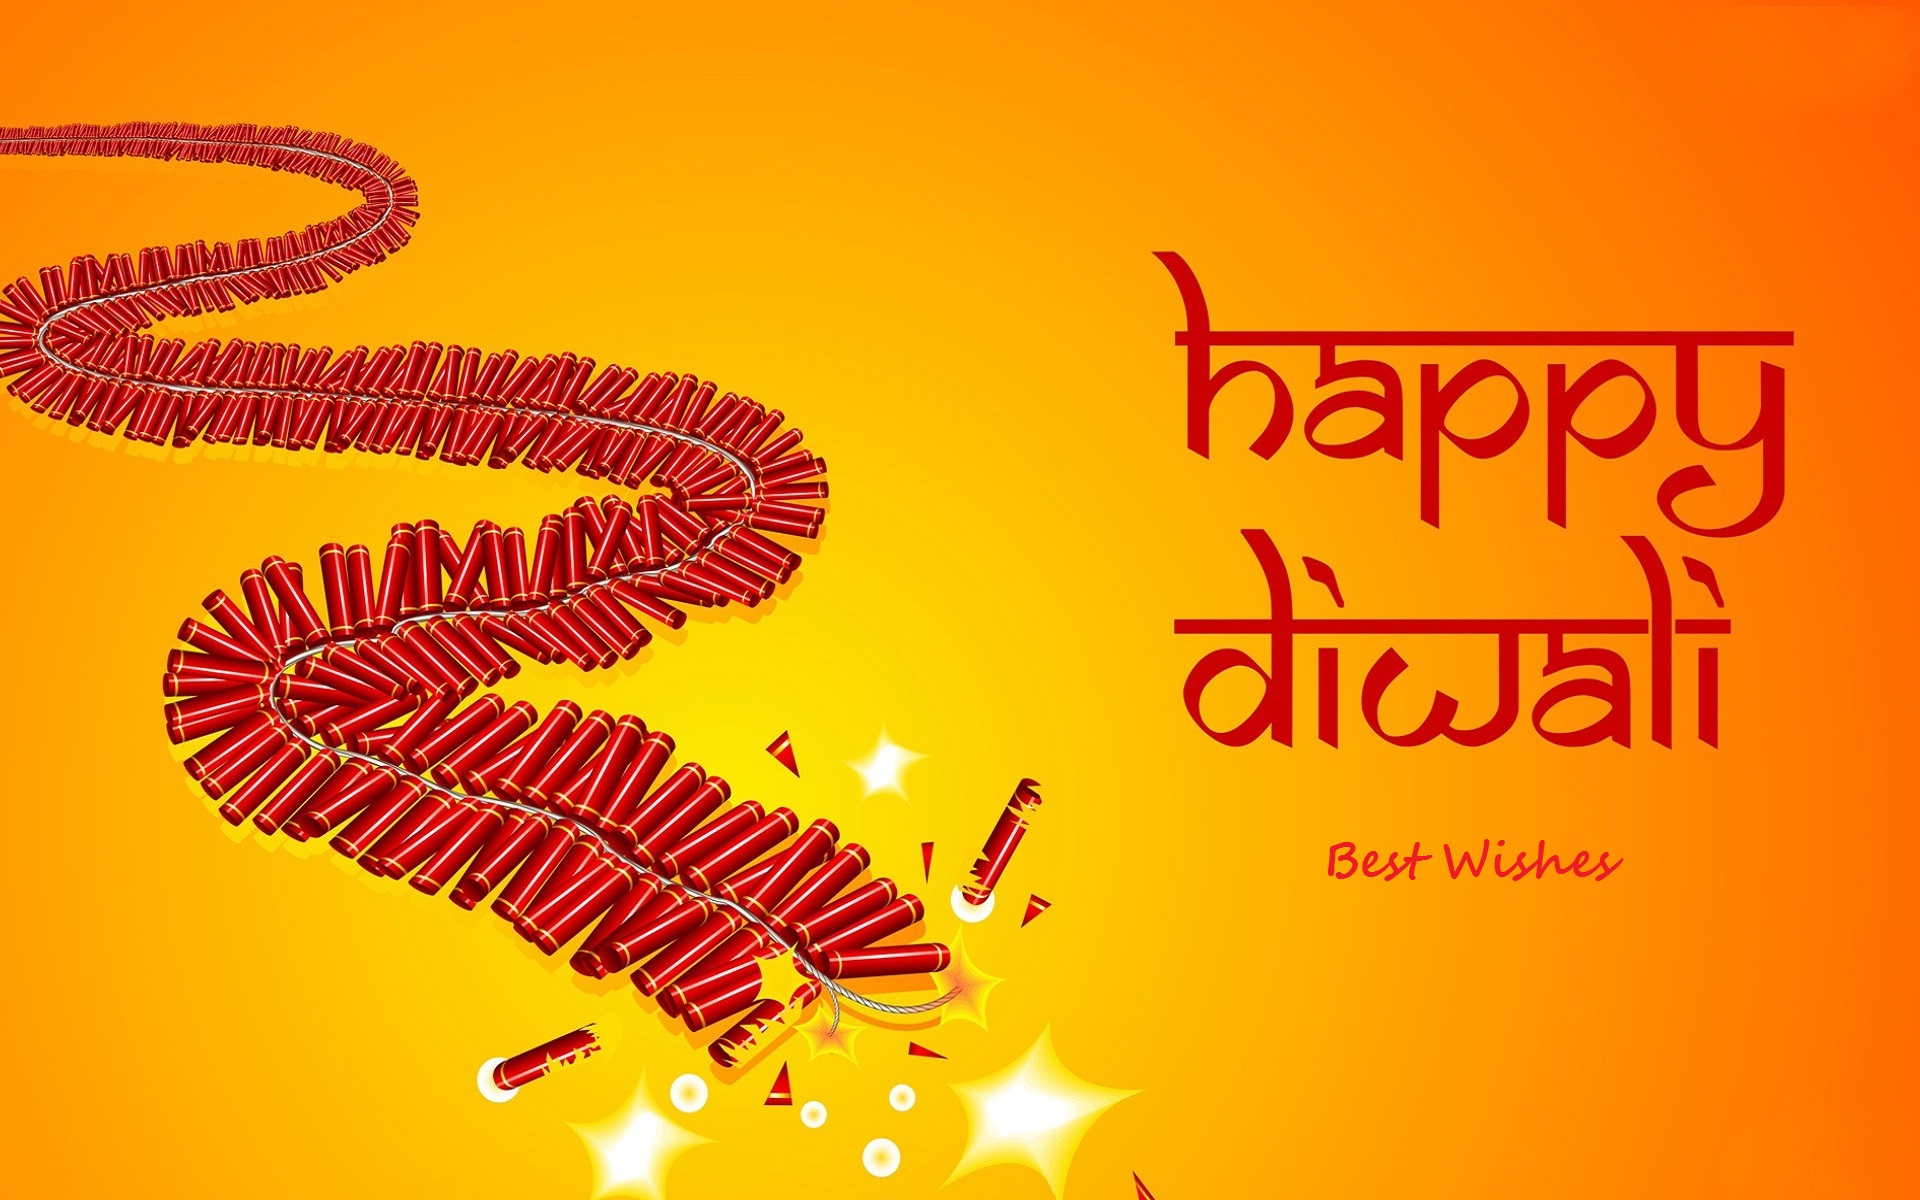 Whatsapp Dp Wallpaper Download - Happy Diwali 2017 Crackers , HD Wallpaper & Backgrounds